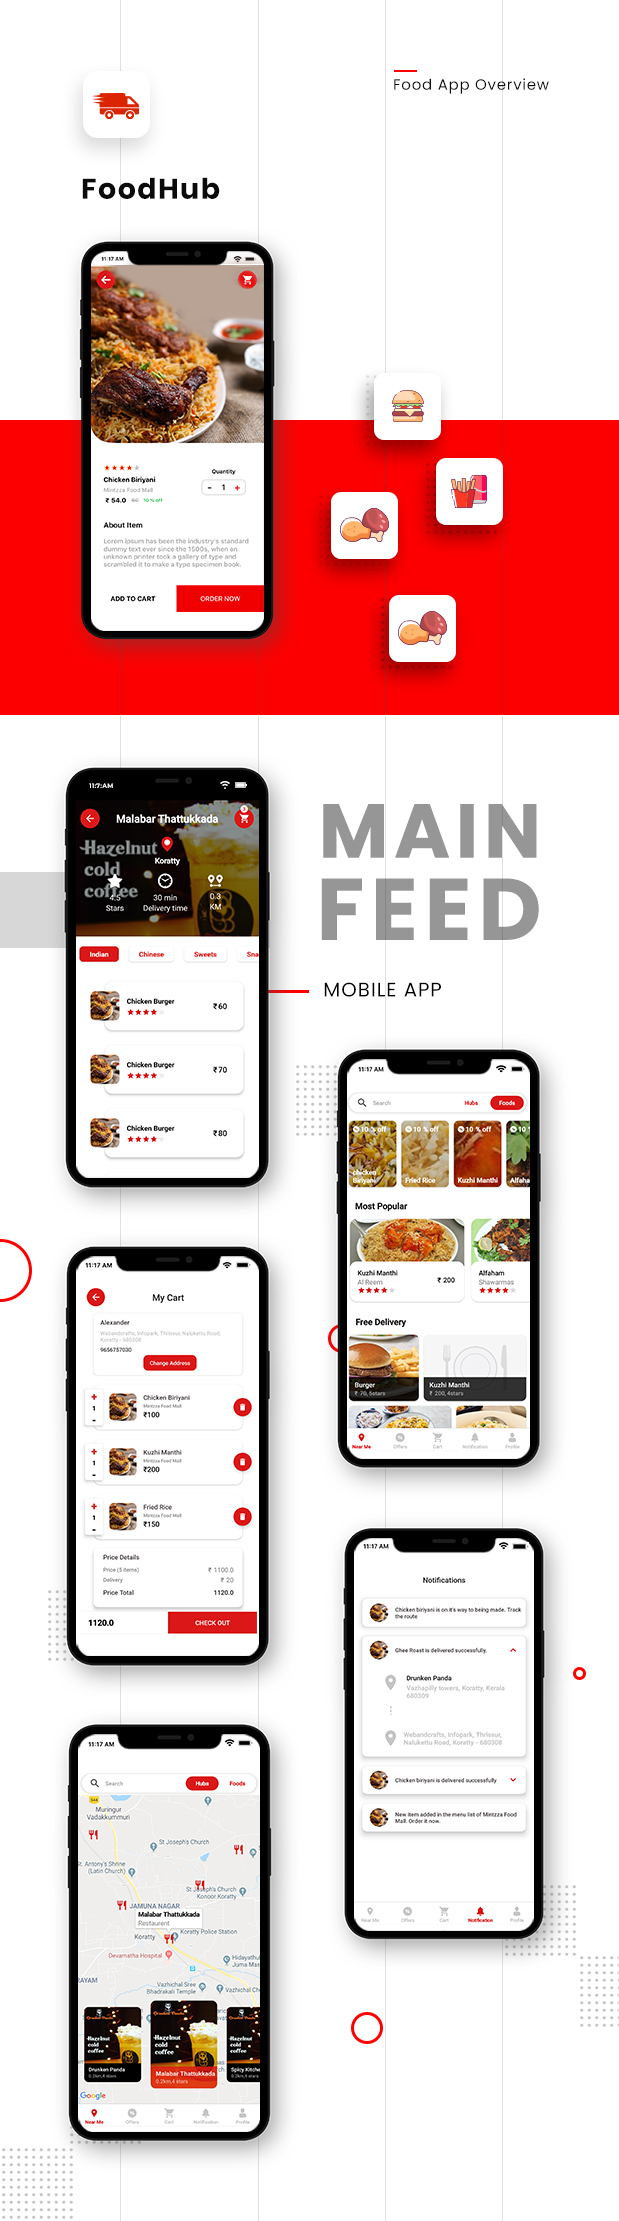 FoodHub | Food Ordering App | iOS Template - 2